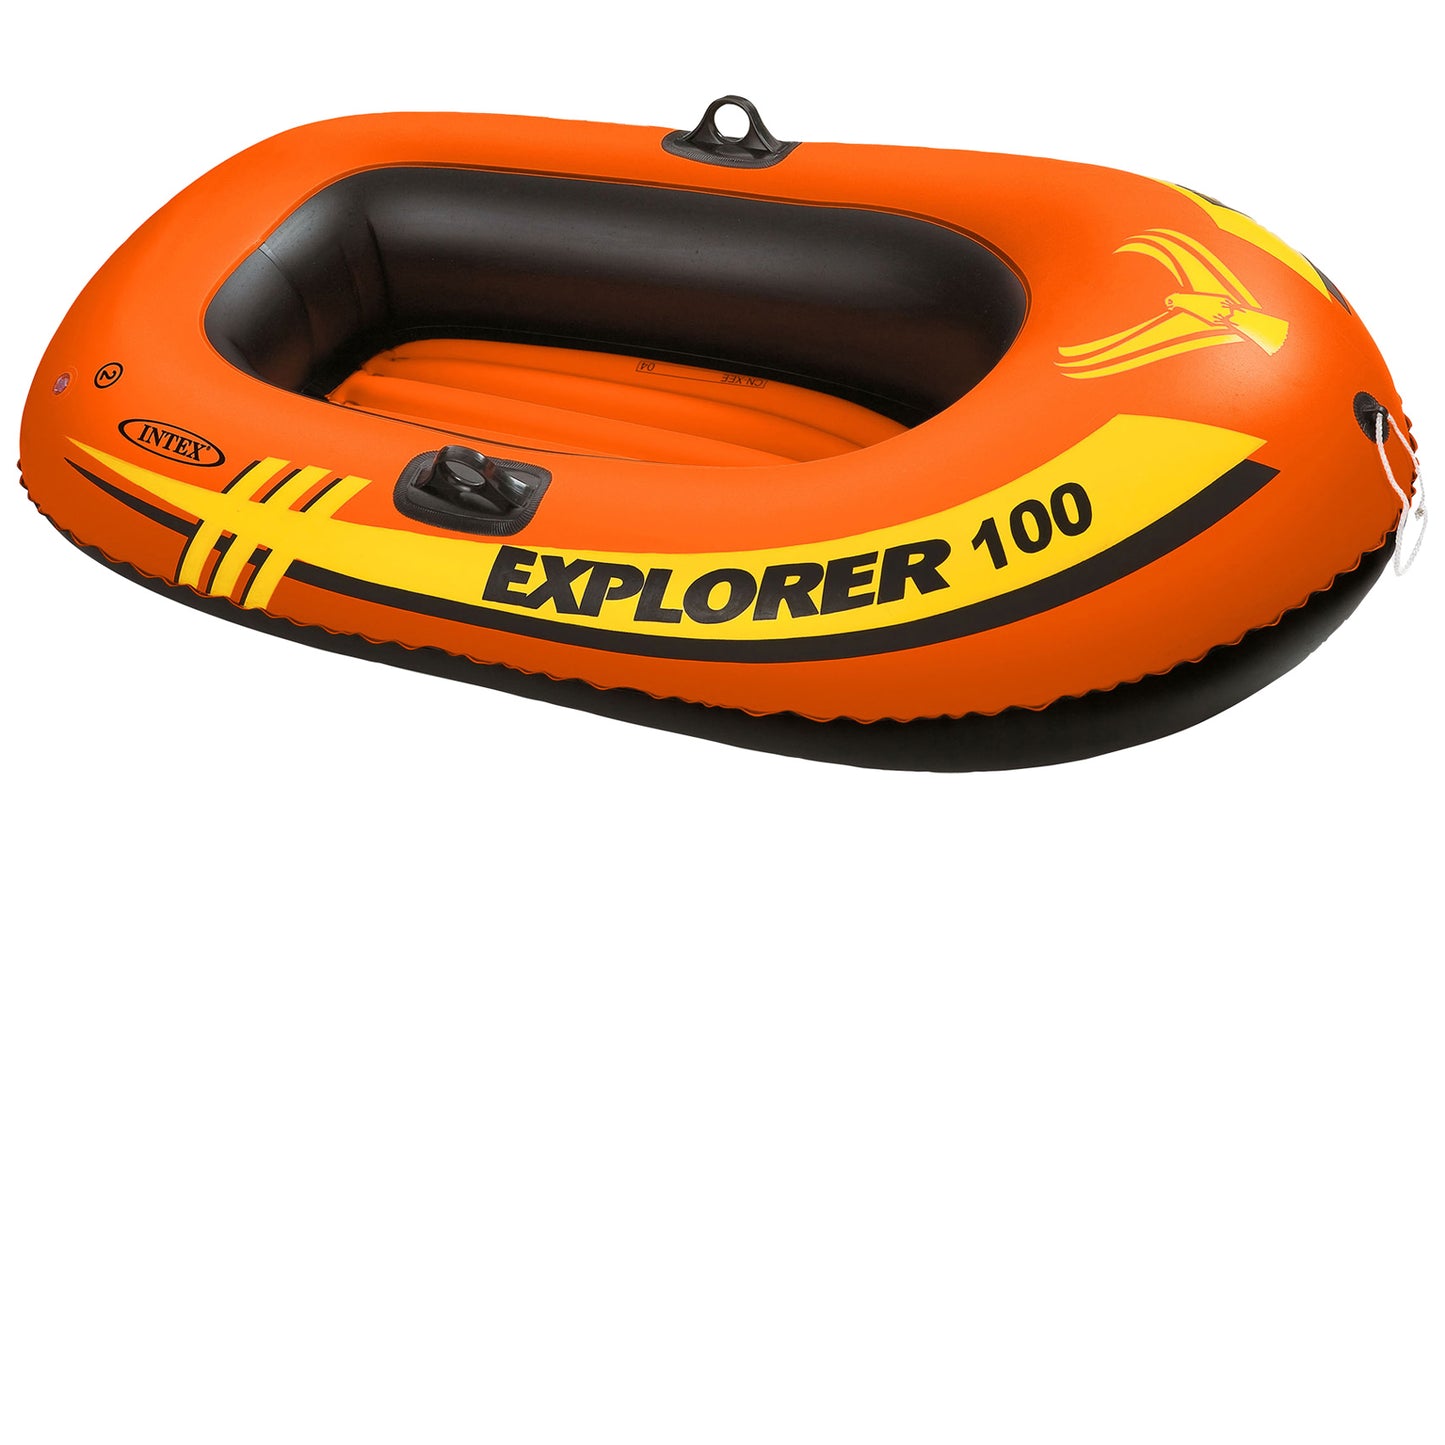 Intex Explorer 100 Boat, New Orange, Size: 1 Person, Intex